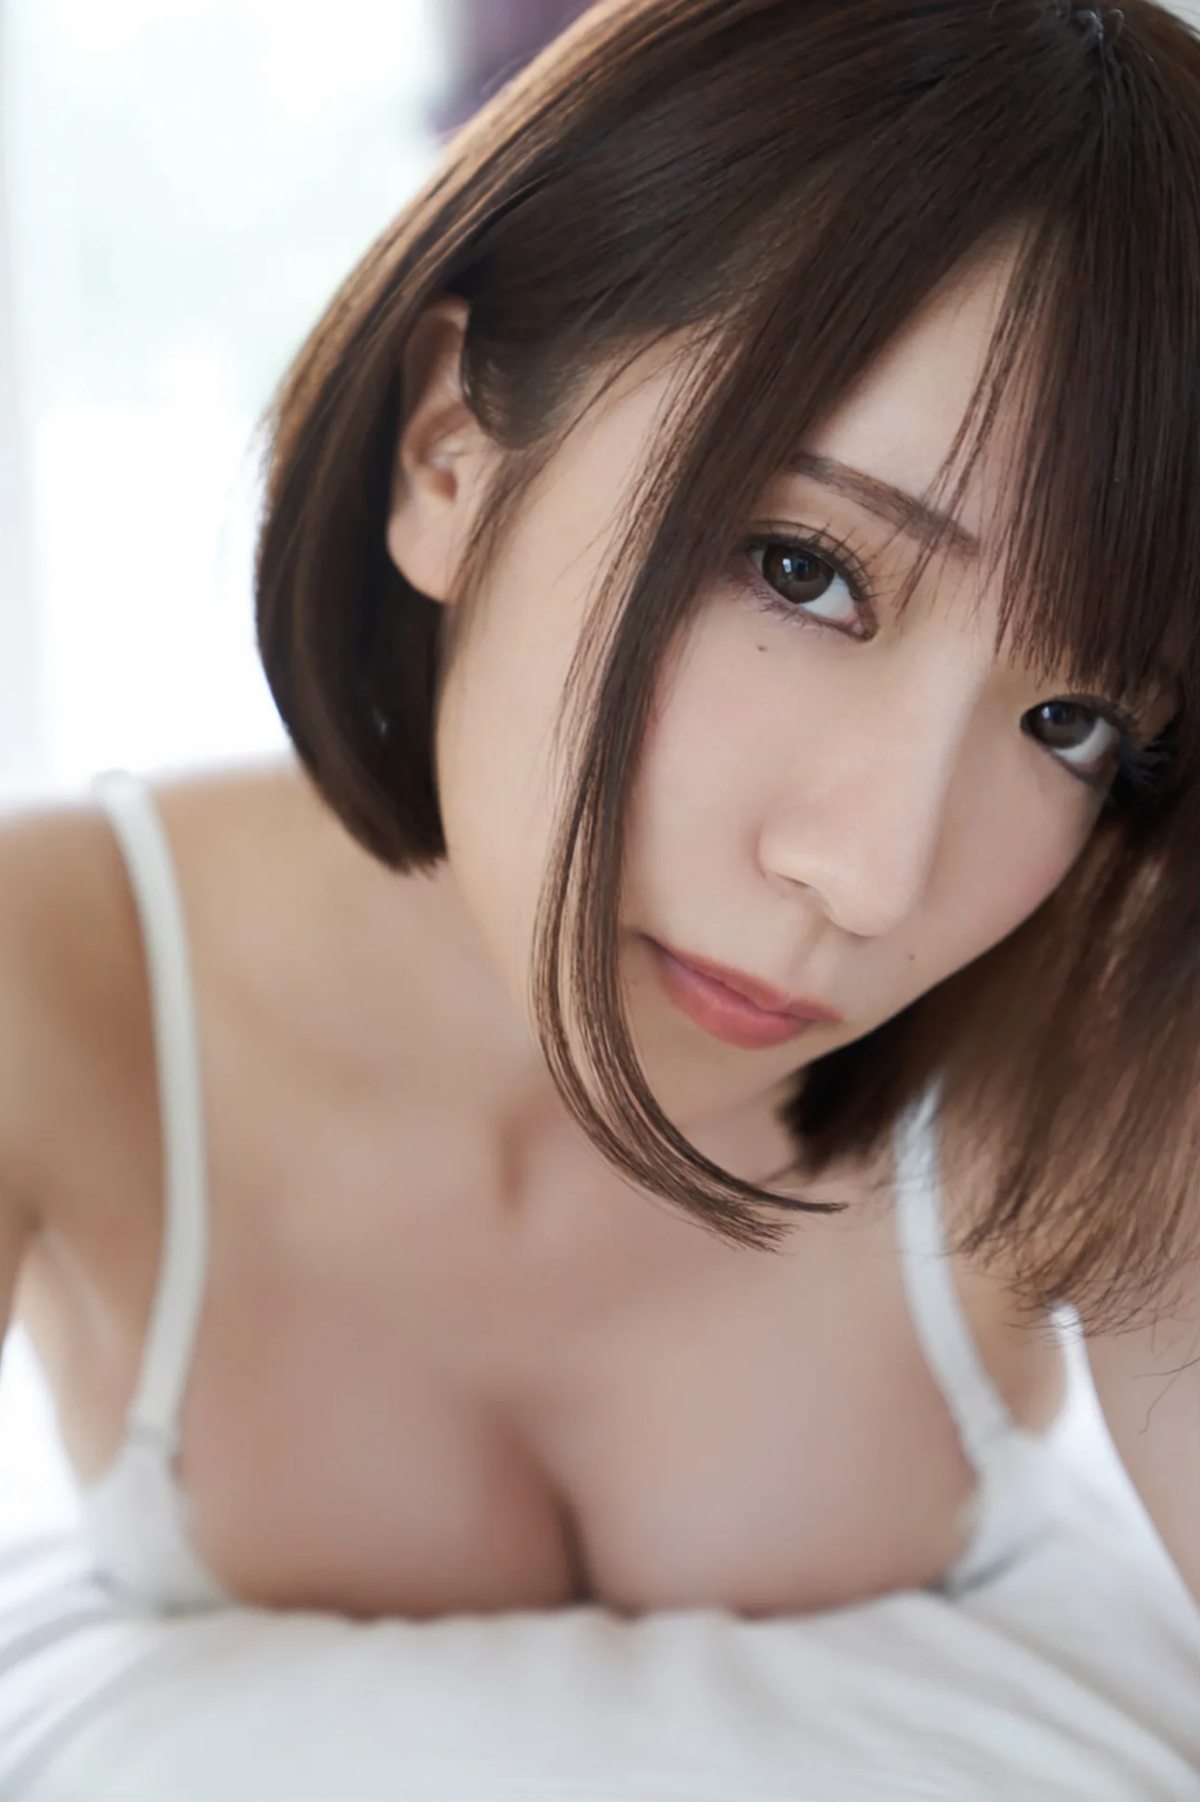 FRIDAY Digital Photobook Airi Shimizu 清水あいり Too erotic body Vol 3 エロすぎるカラダ Vol 3 2021 04 30 0027 1607557019.jpg